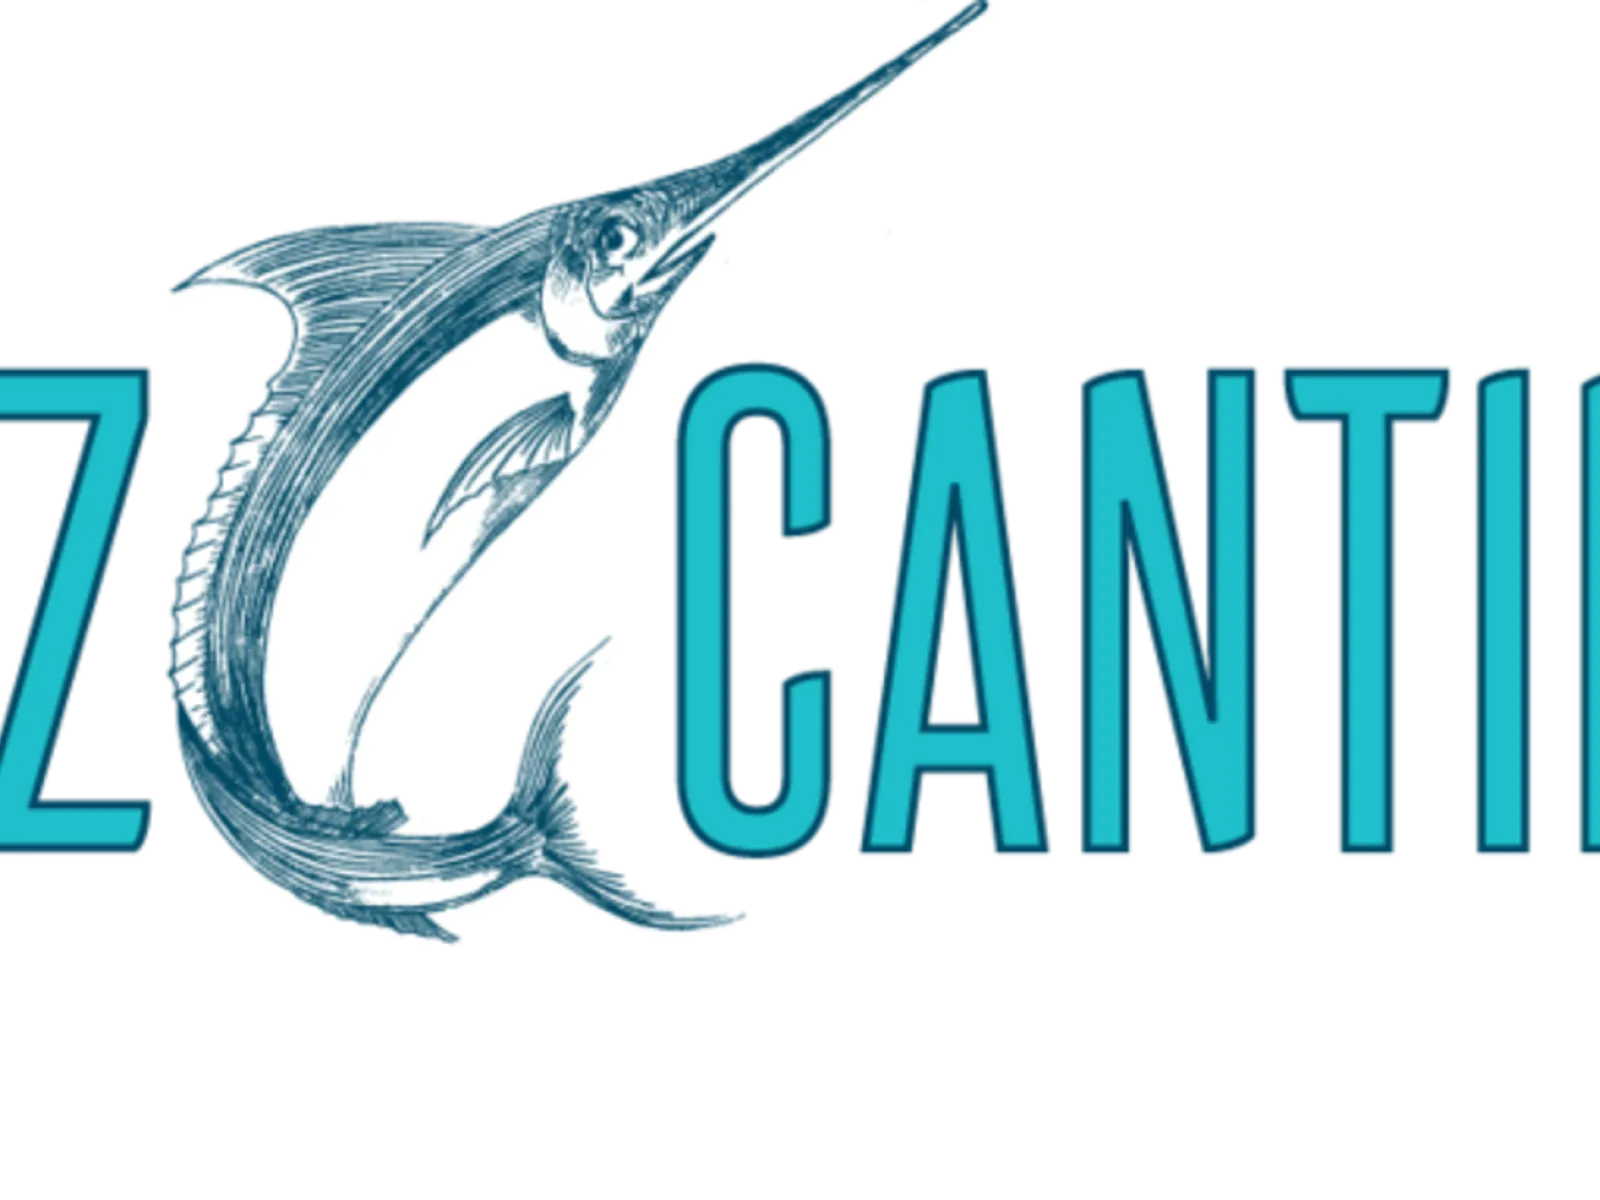 PEZ CANTINA Coastal Mexican Kitchen